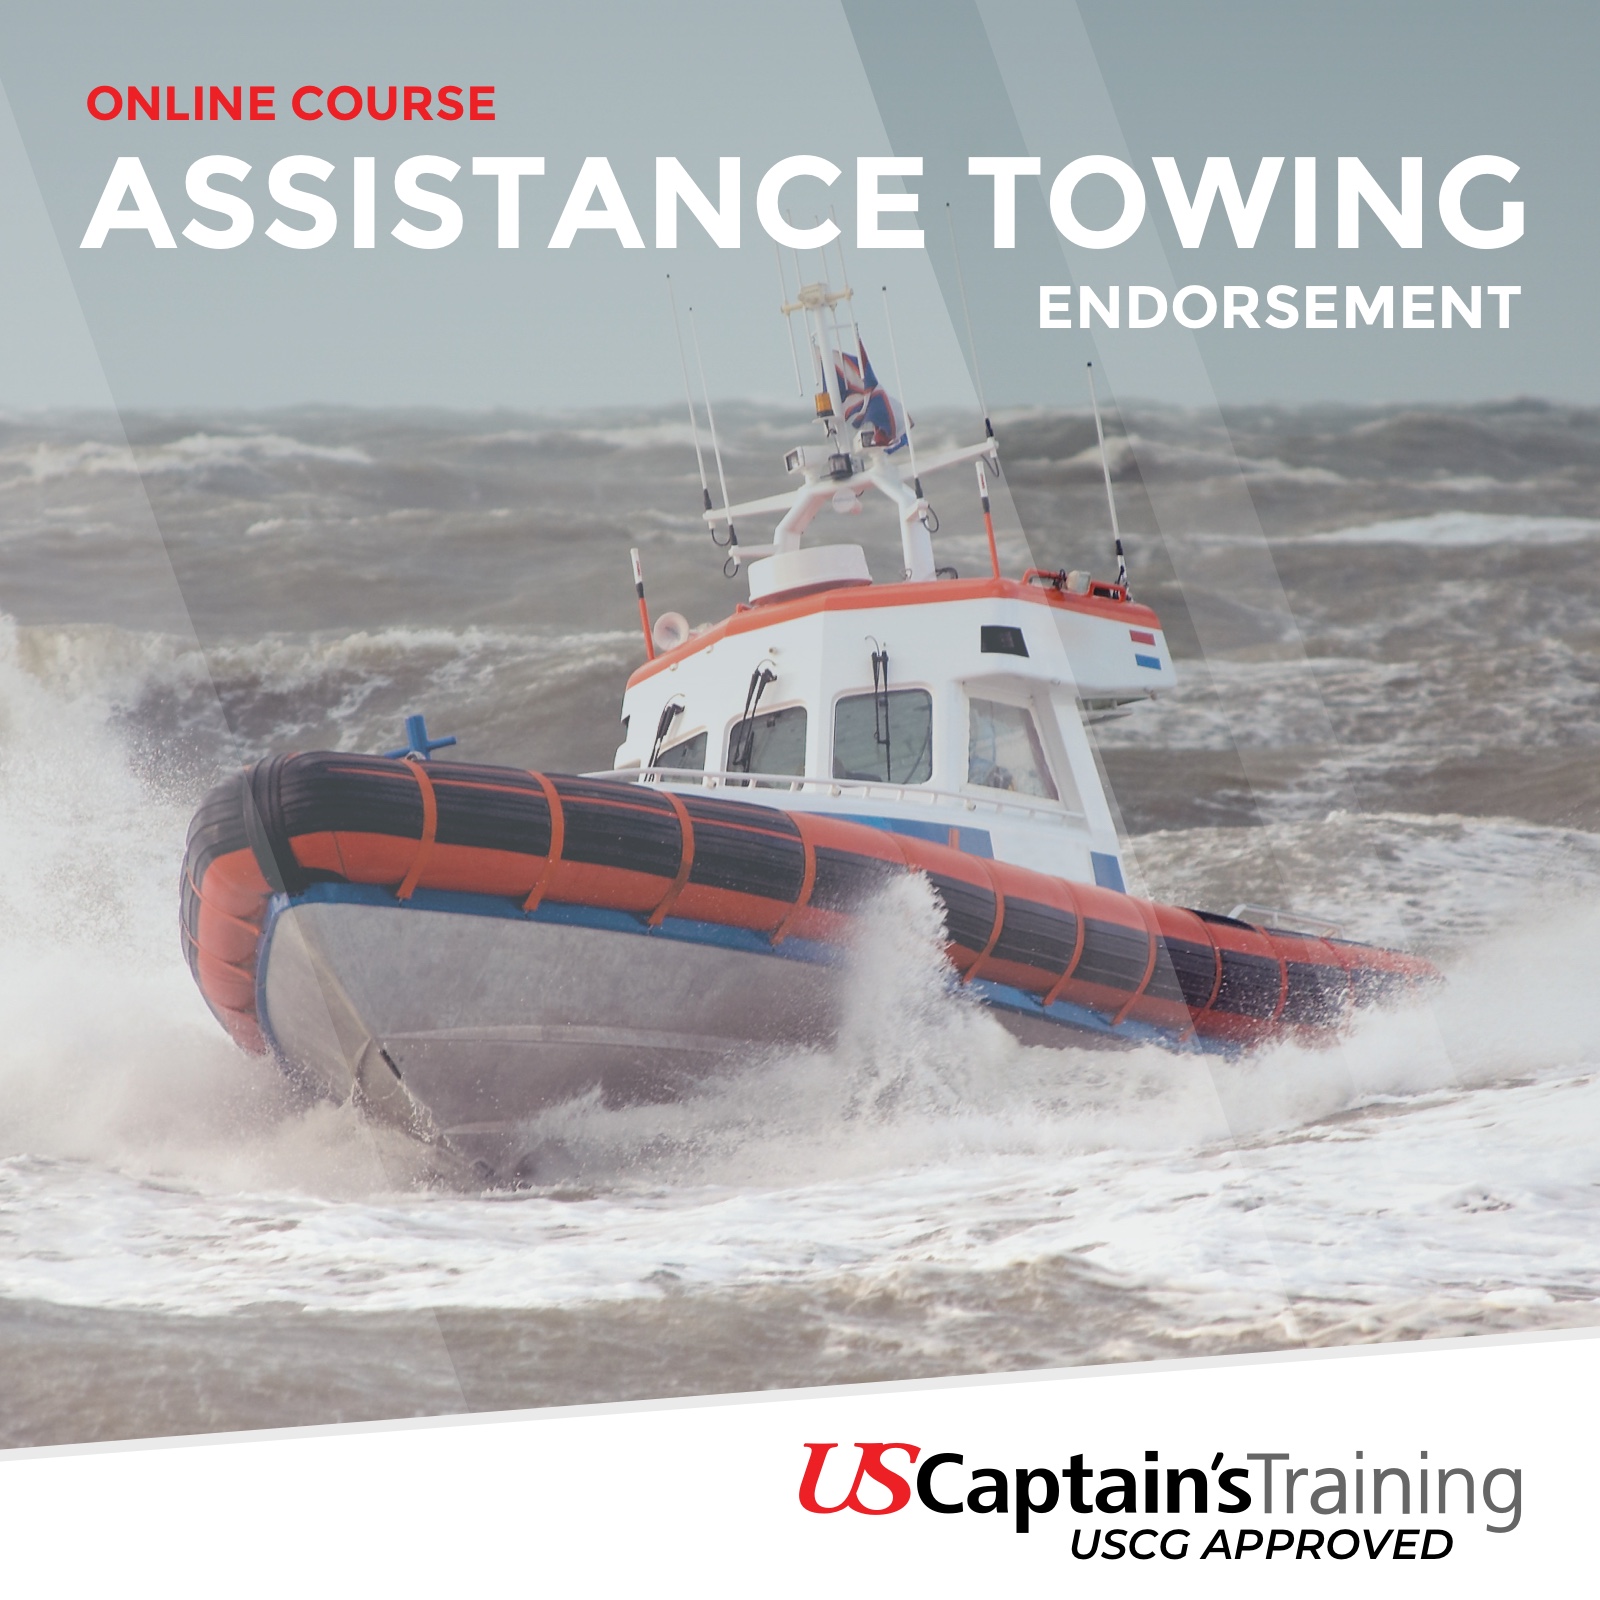 Captain's License Online Course & Exam from US Captain's Training - Assistance Towing Endorsement